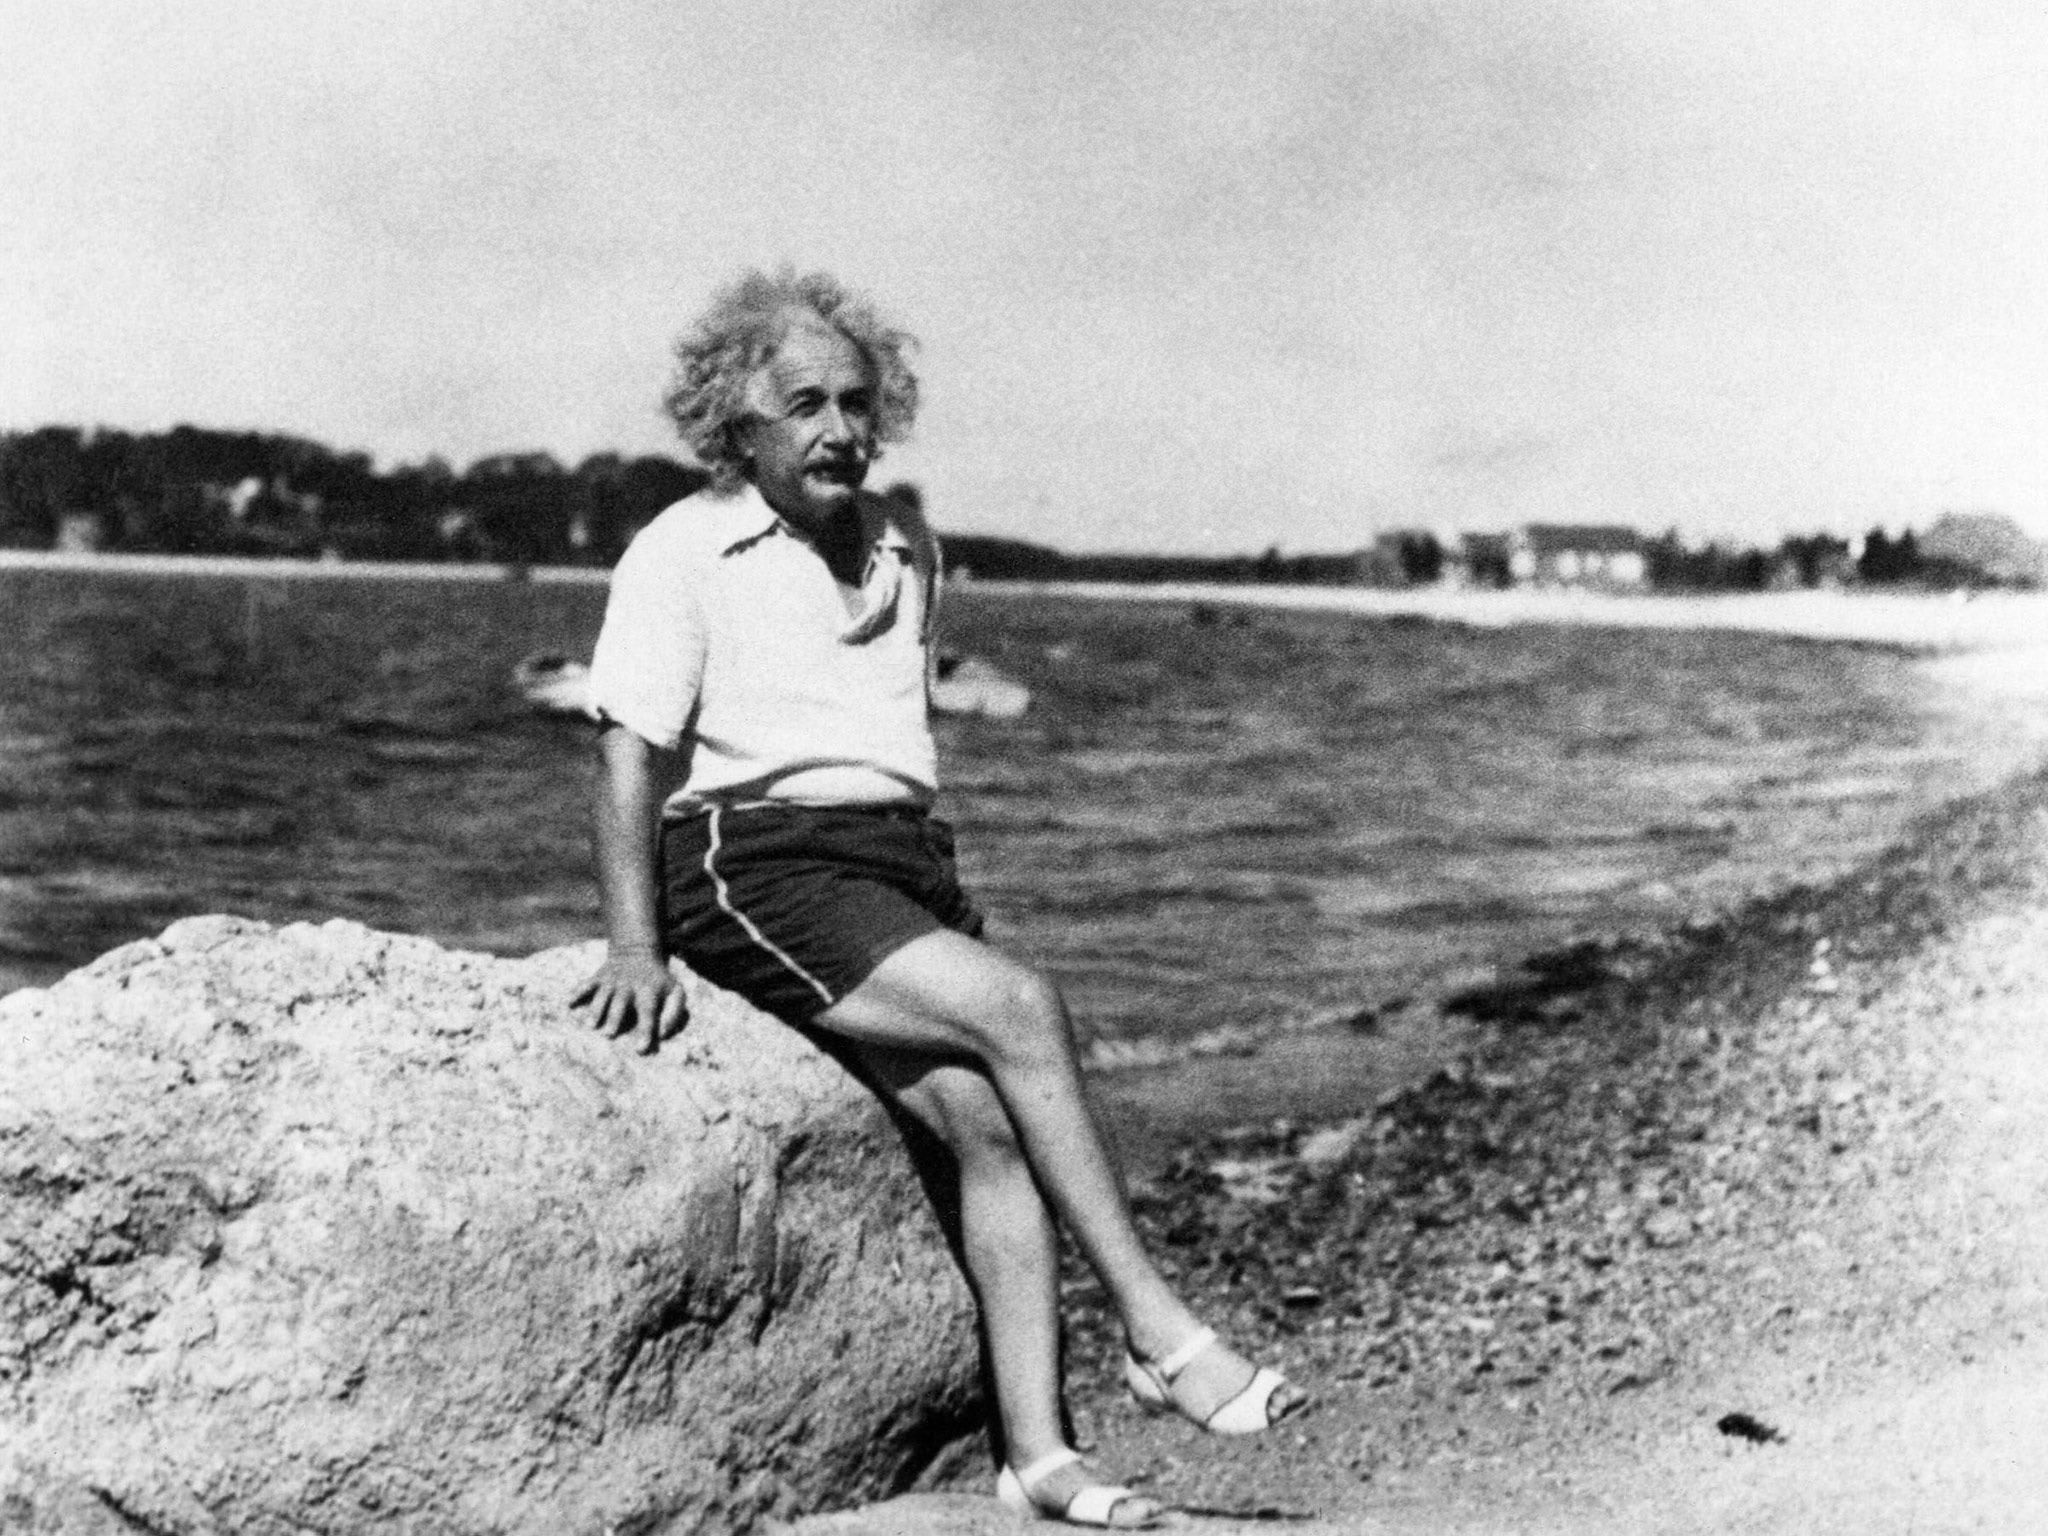 Albert Einstein launches his modelling career